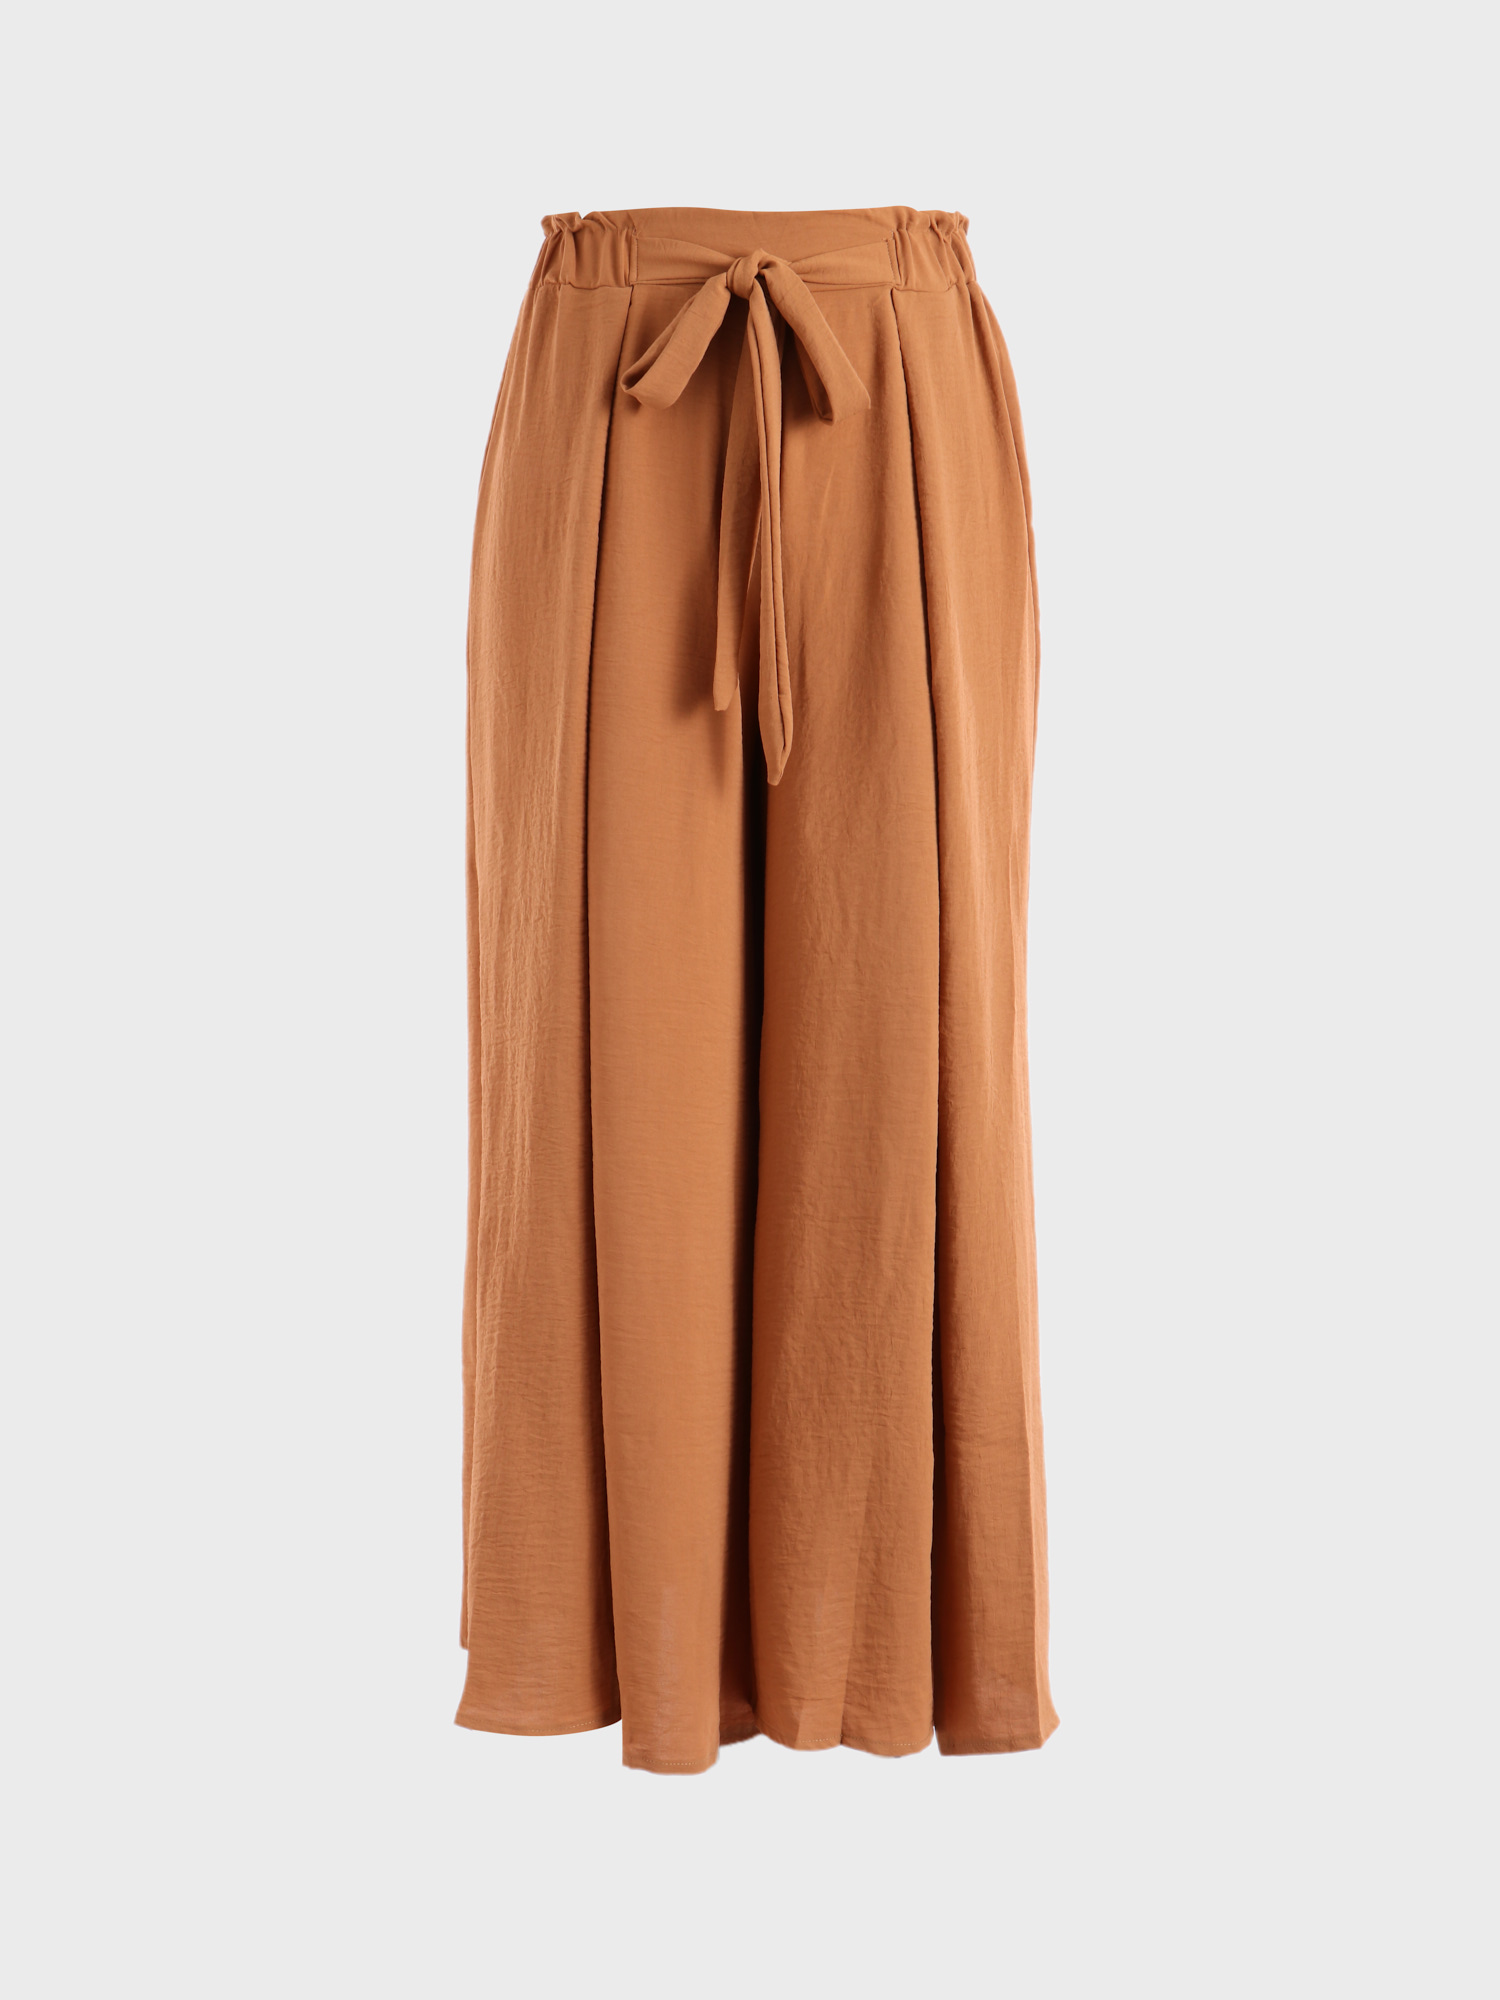 Brown Midsize Wide-Leg Pleated Nattily Pants with Split-Front | HEMWAVE - Midsize Fashion